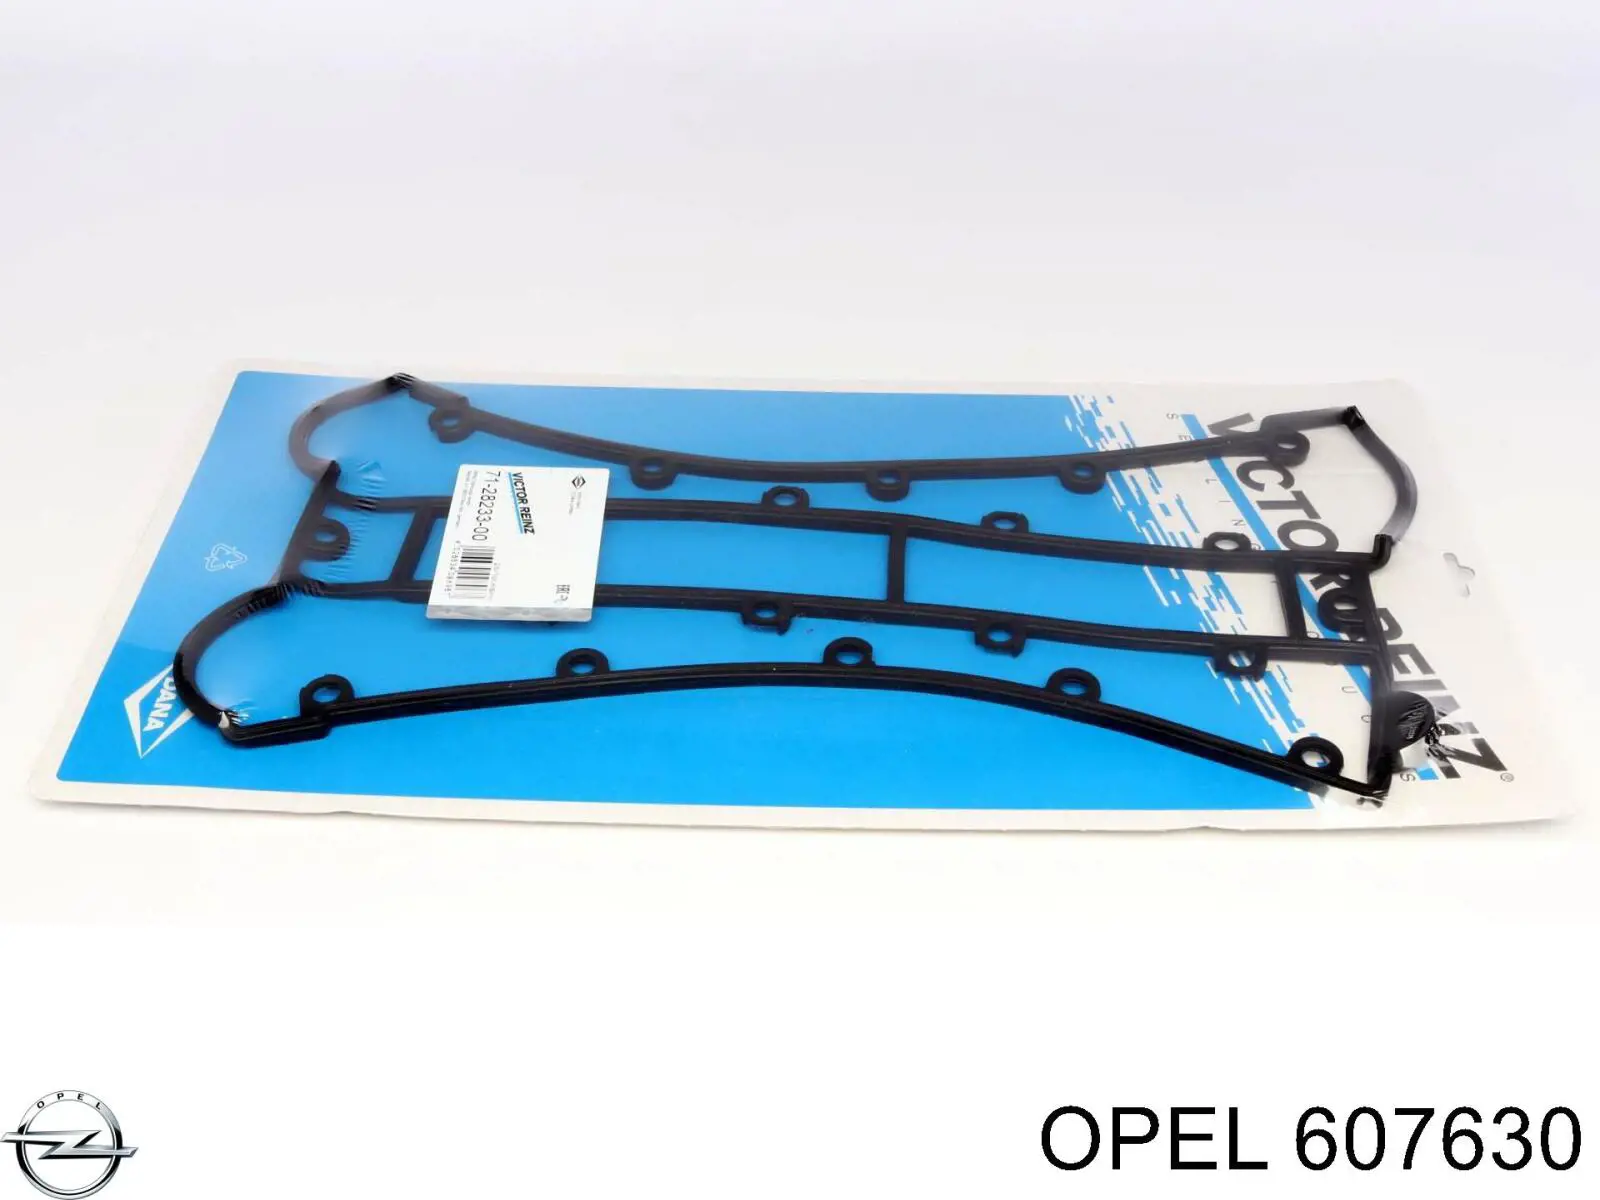 607630 Opel junta tapa de balancines